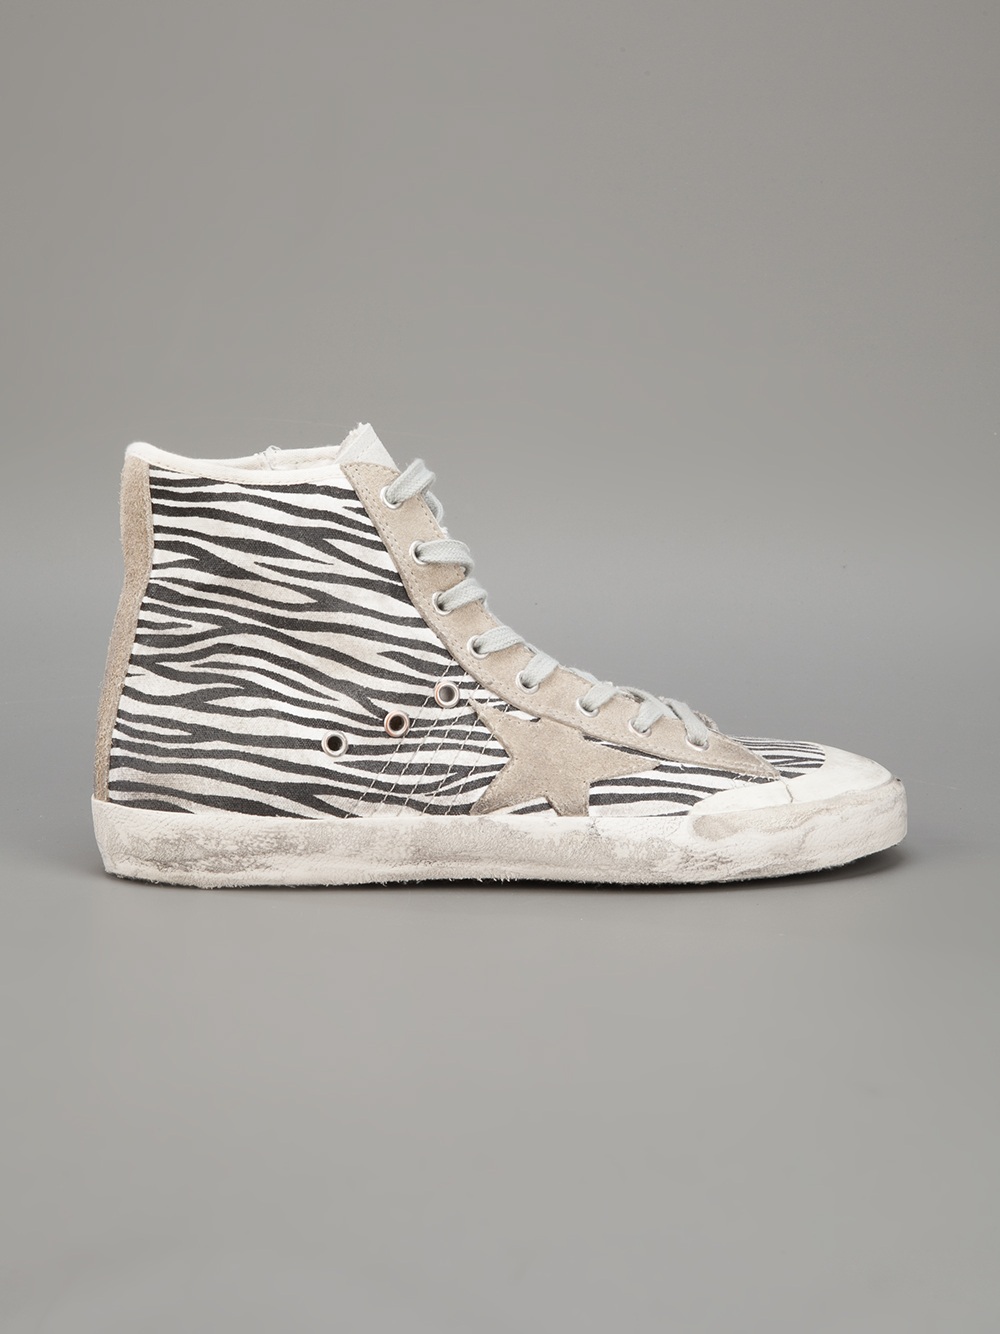 Lyst - Golden Goose Deluxe Brand Francy Zebra Print Sneaker for Men